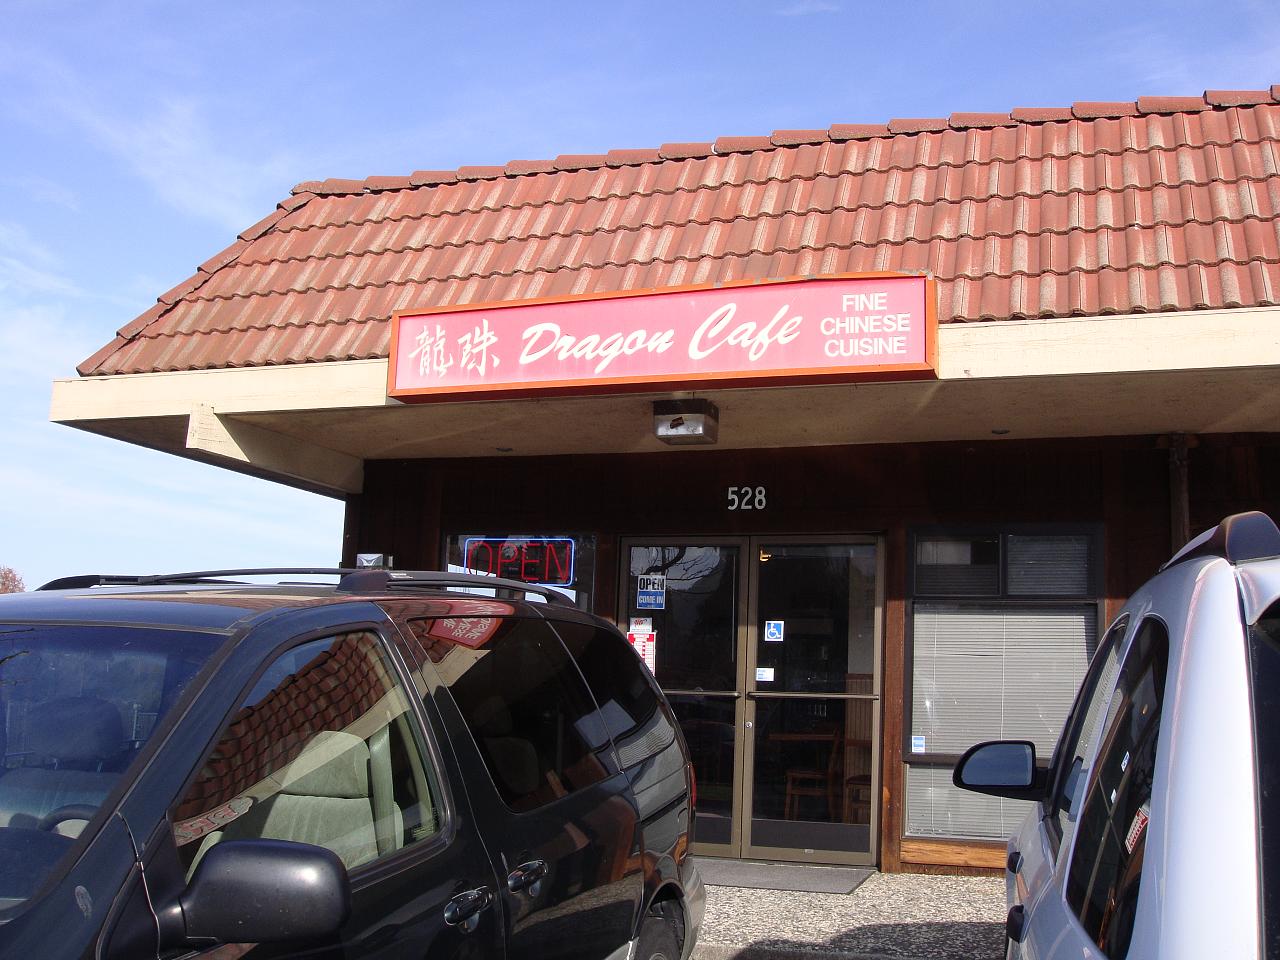 Dragon Cafe